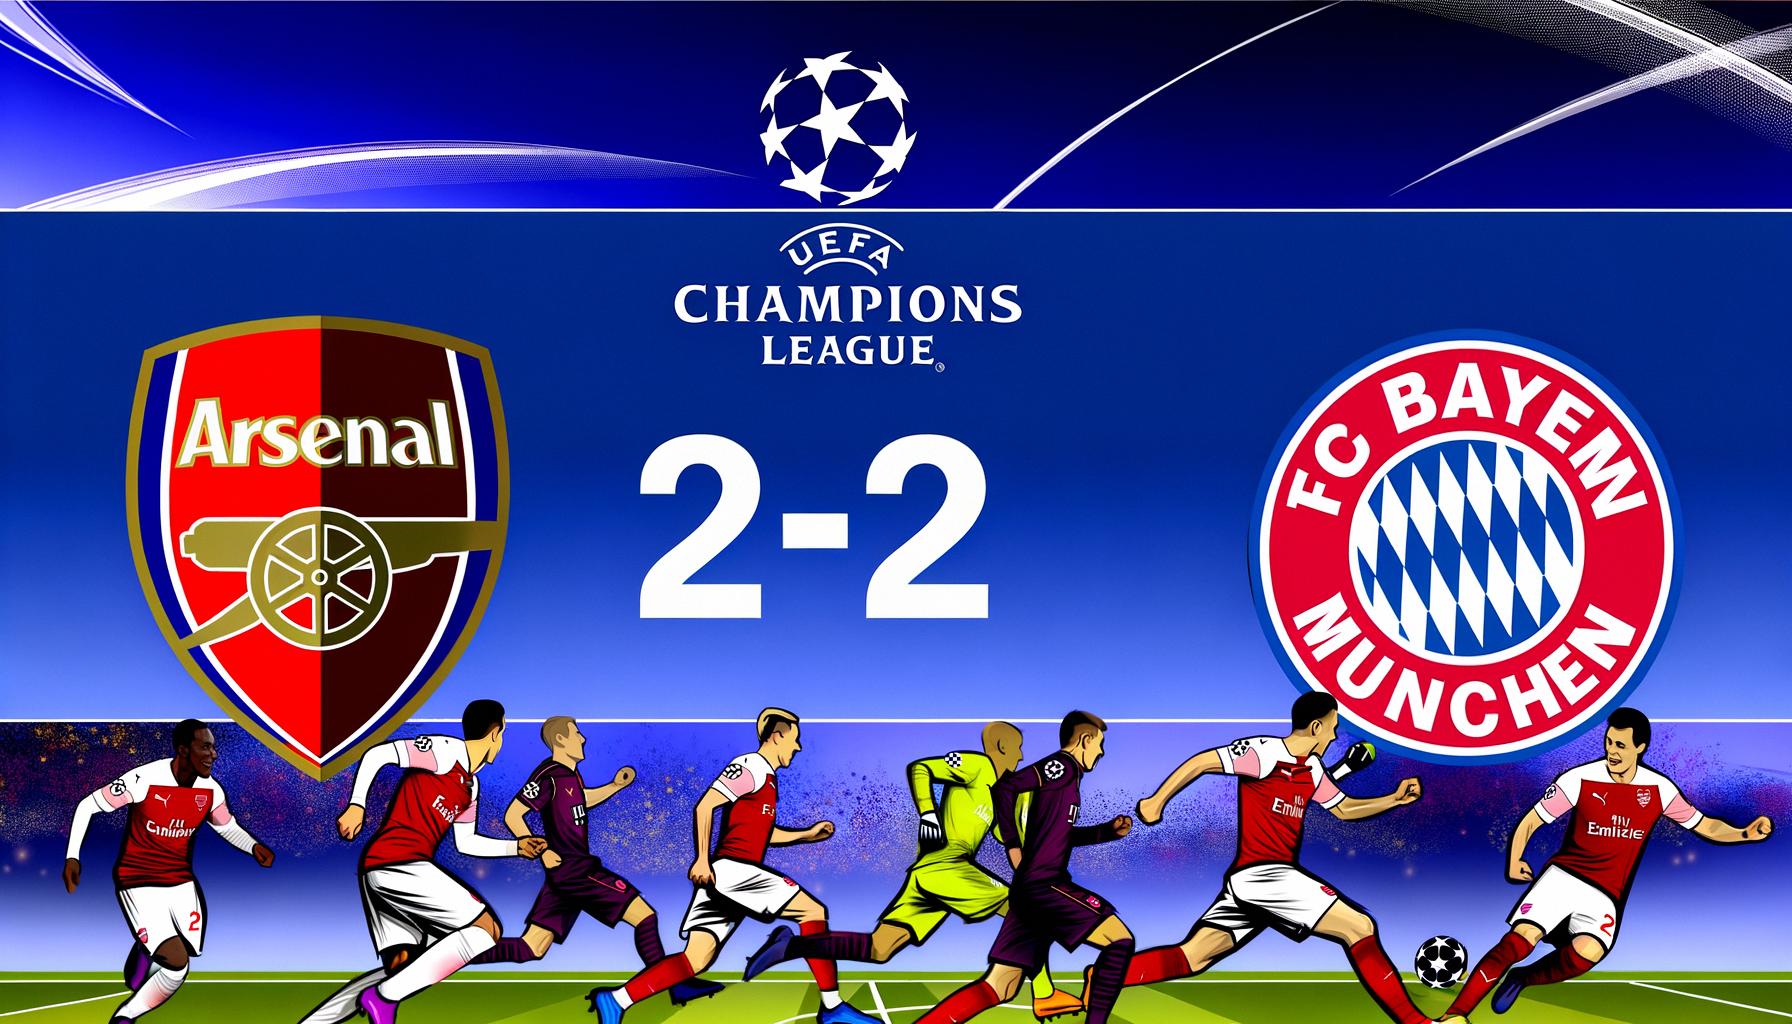 Arsenal and Bayern Munich drew 2-2 in Champions League Balanced News